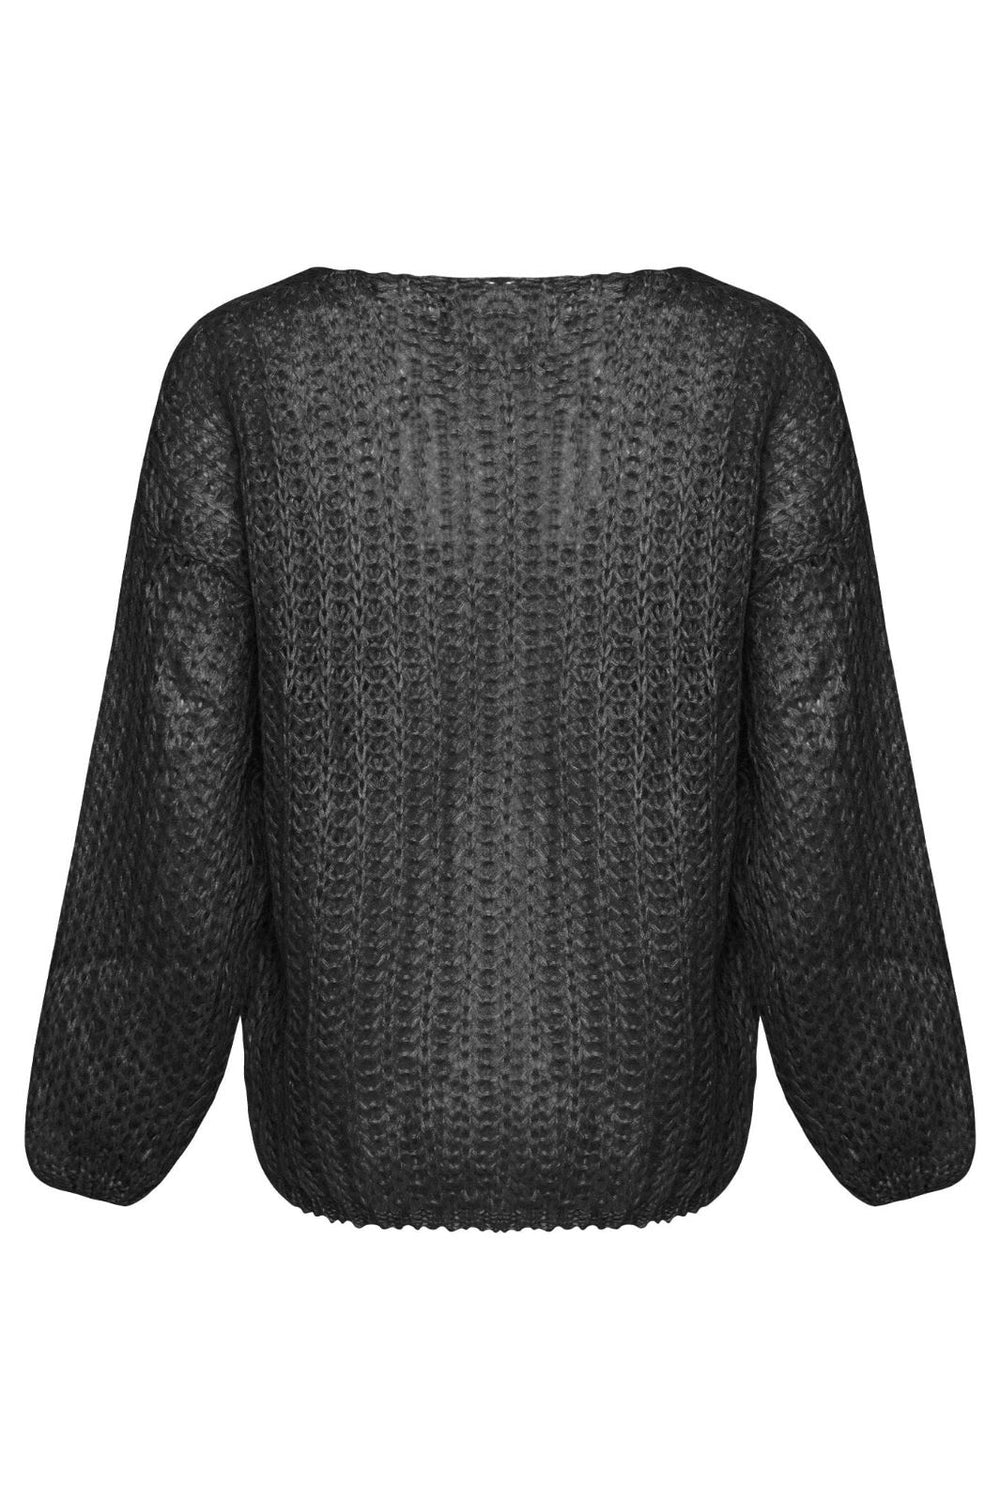 Noella - Joseph Knit Sweater - 004 Black Strikbluser 